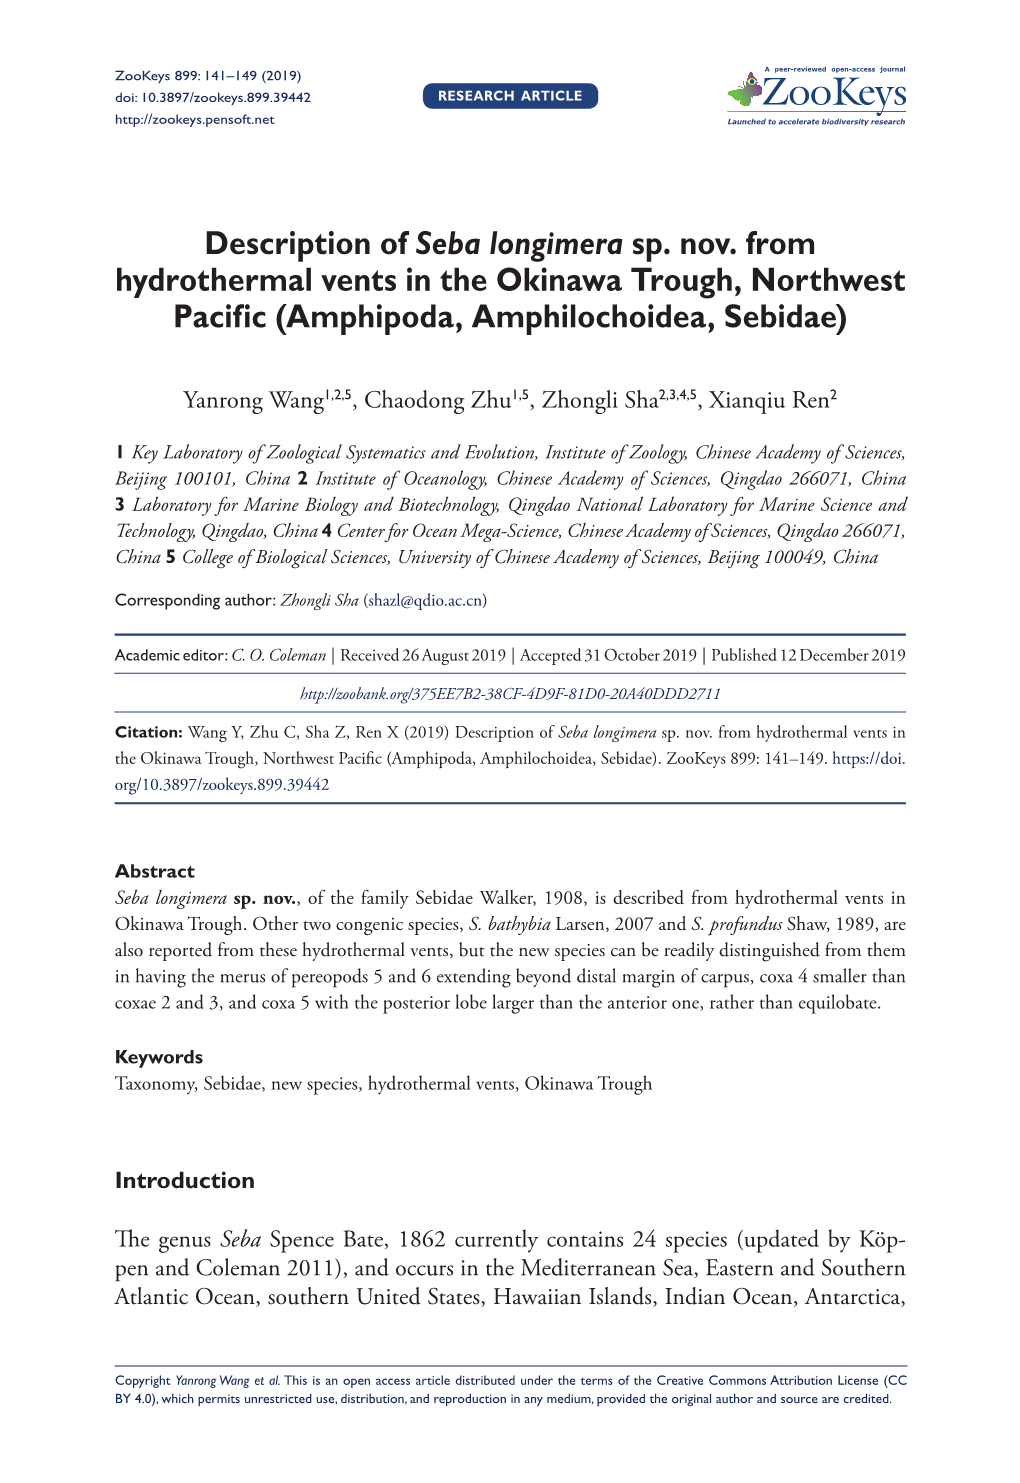 Description of Seba Longimera Sp. Nov. from Hydrothermal Vents in the Okinawa Trough, Northwest Pacific (Amphipoda, Amphilochoidea, Sebidae)